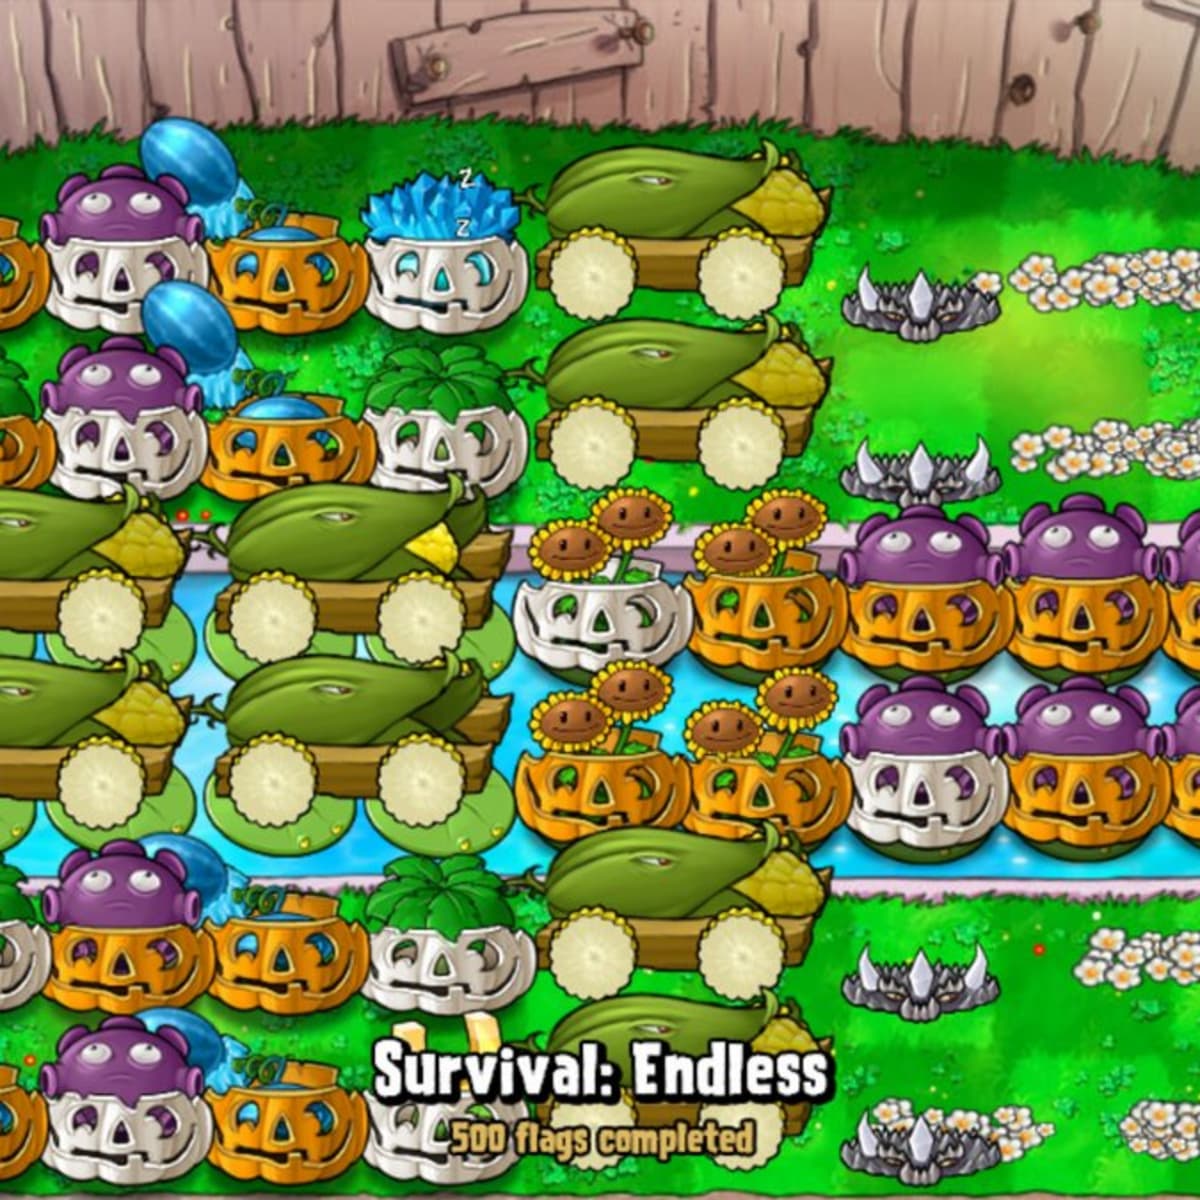 Plants vs. Zombies Endless Survival Strategies — 1,000+ Flags